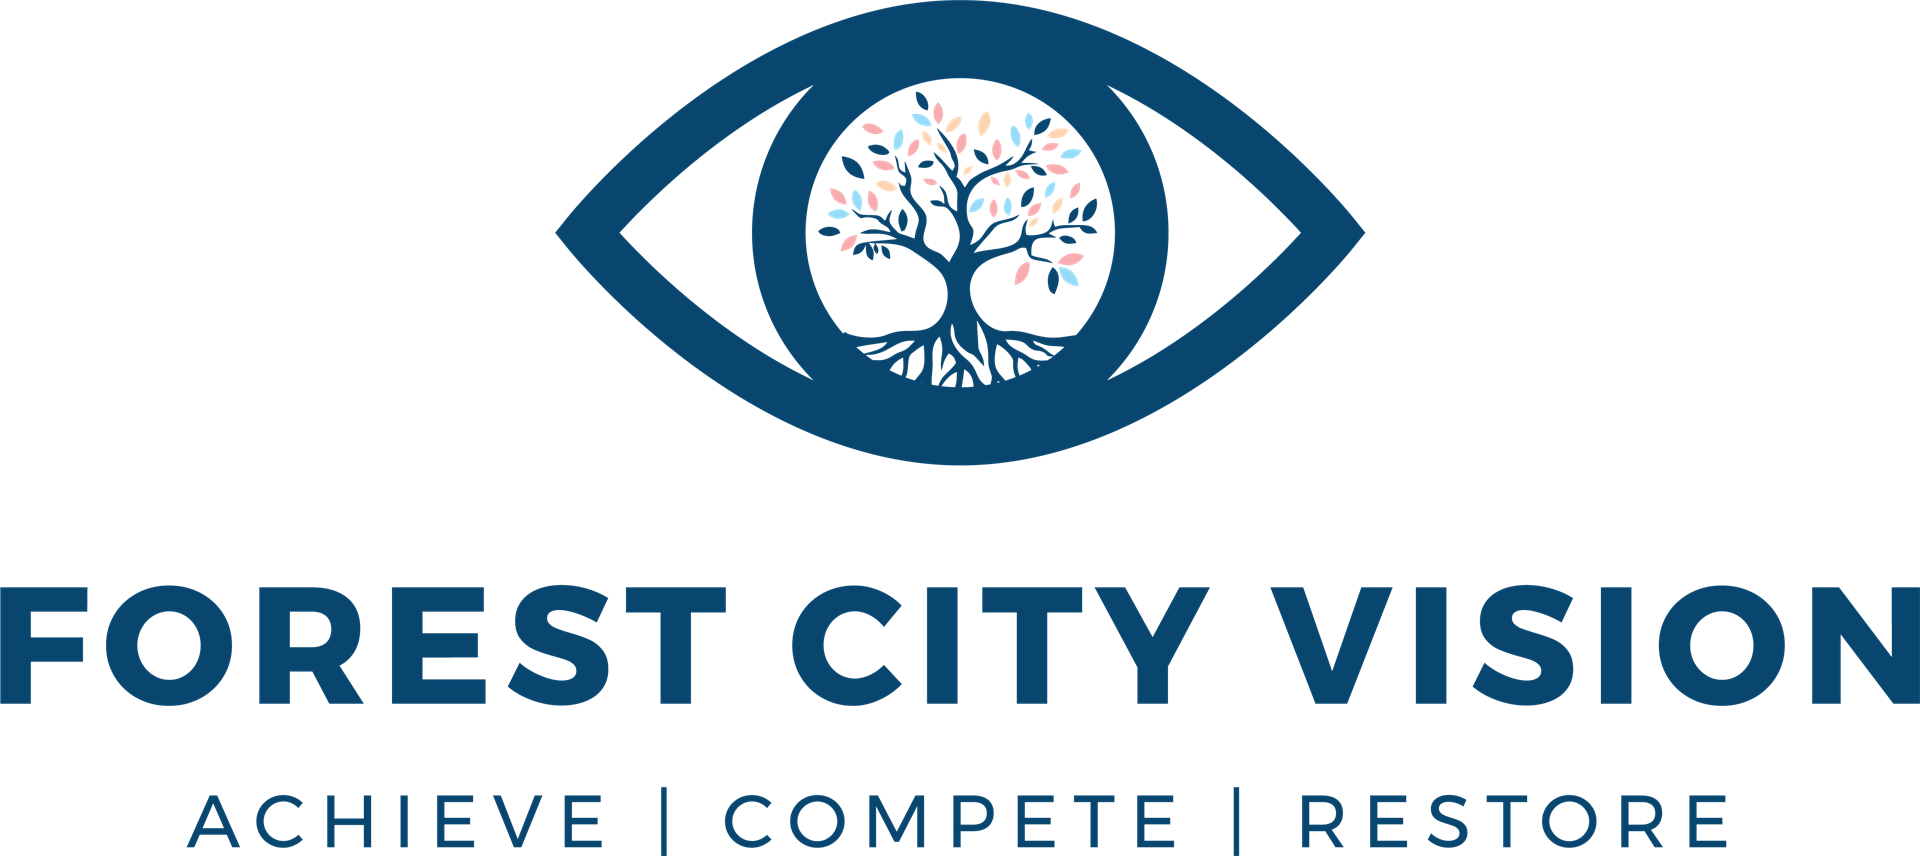 Forest City Vision logo